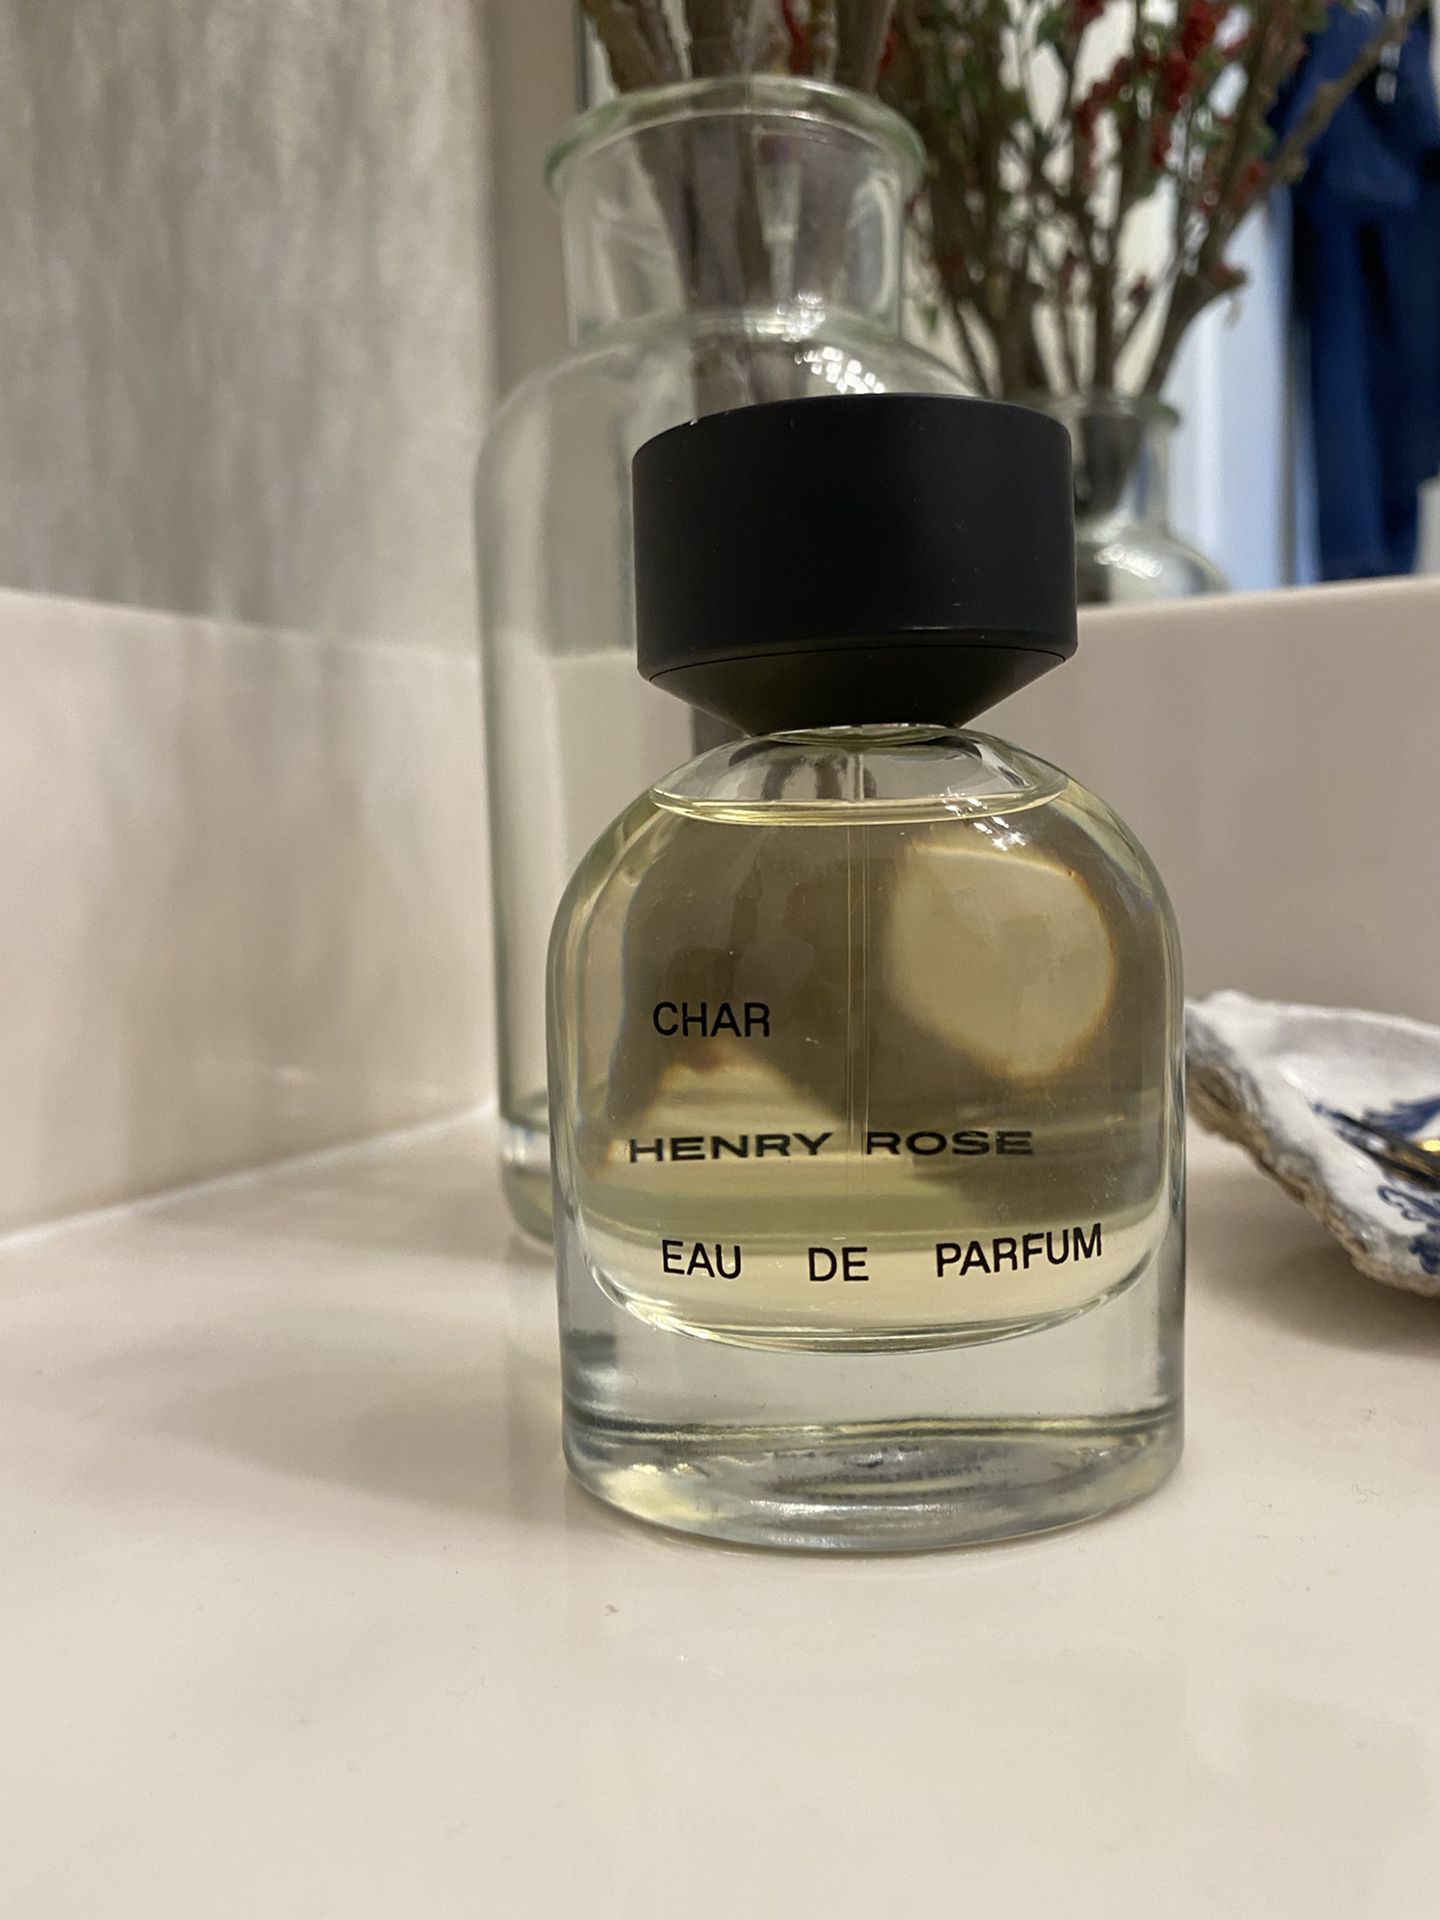 Henry Rose CHAR perfume